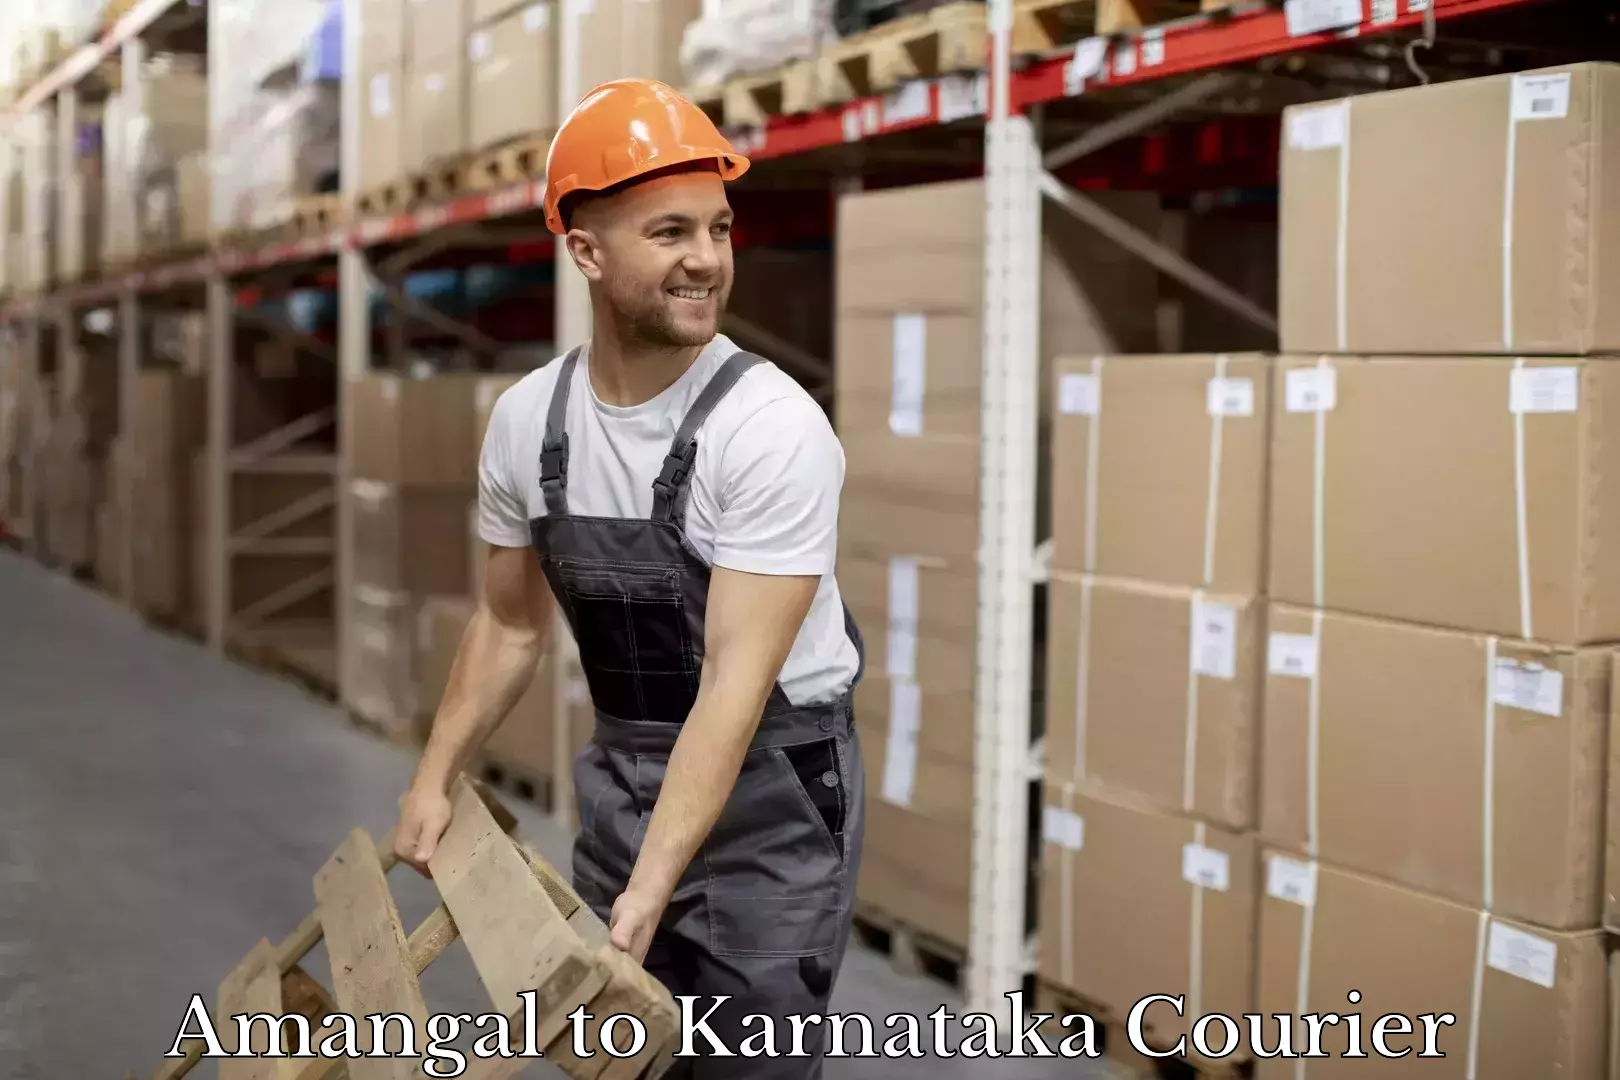 24/7 courier service Amangal to Karnataka